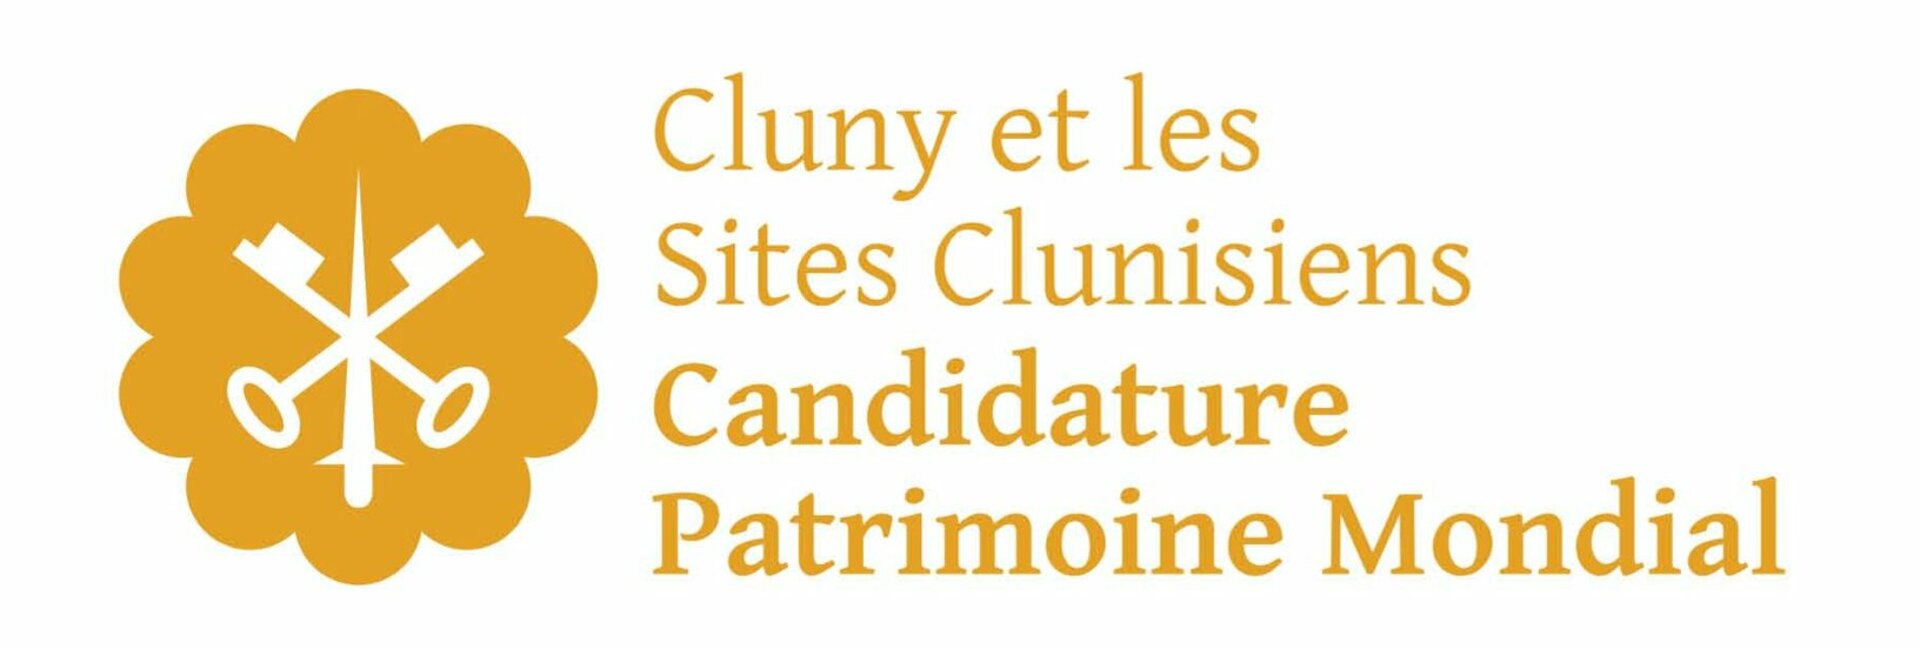 Candidature patrimoine mondial sites clunisiens